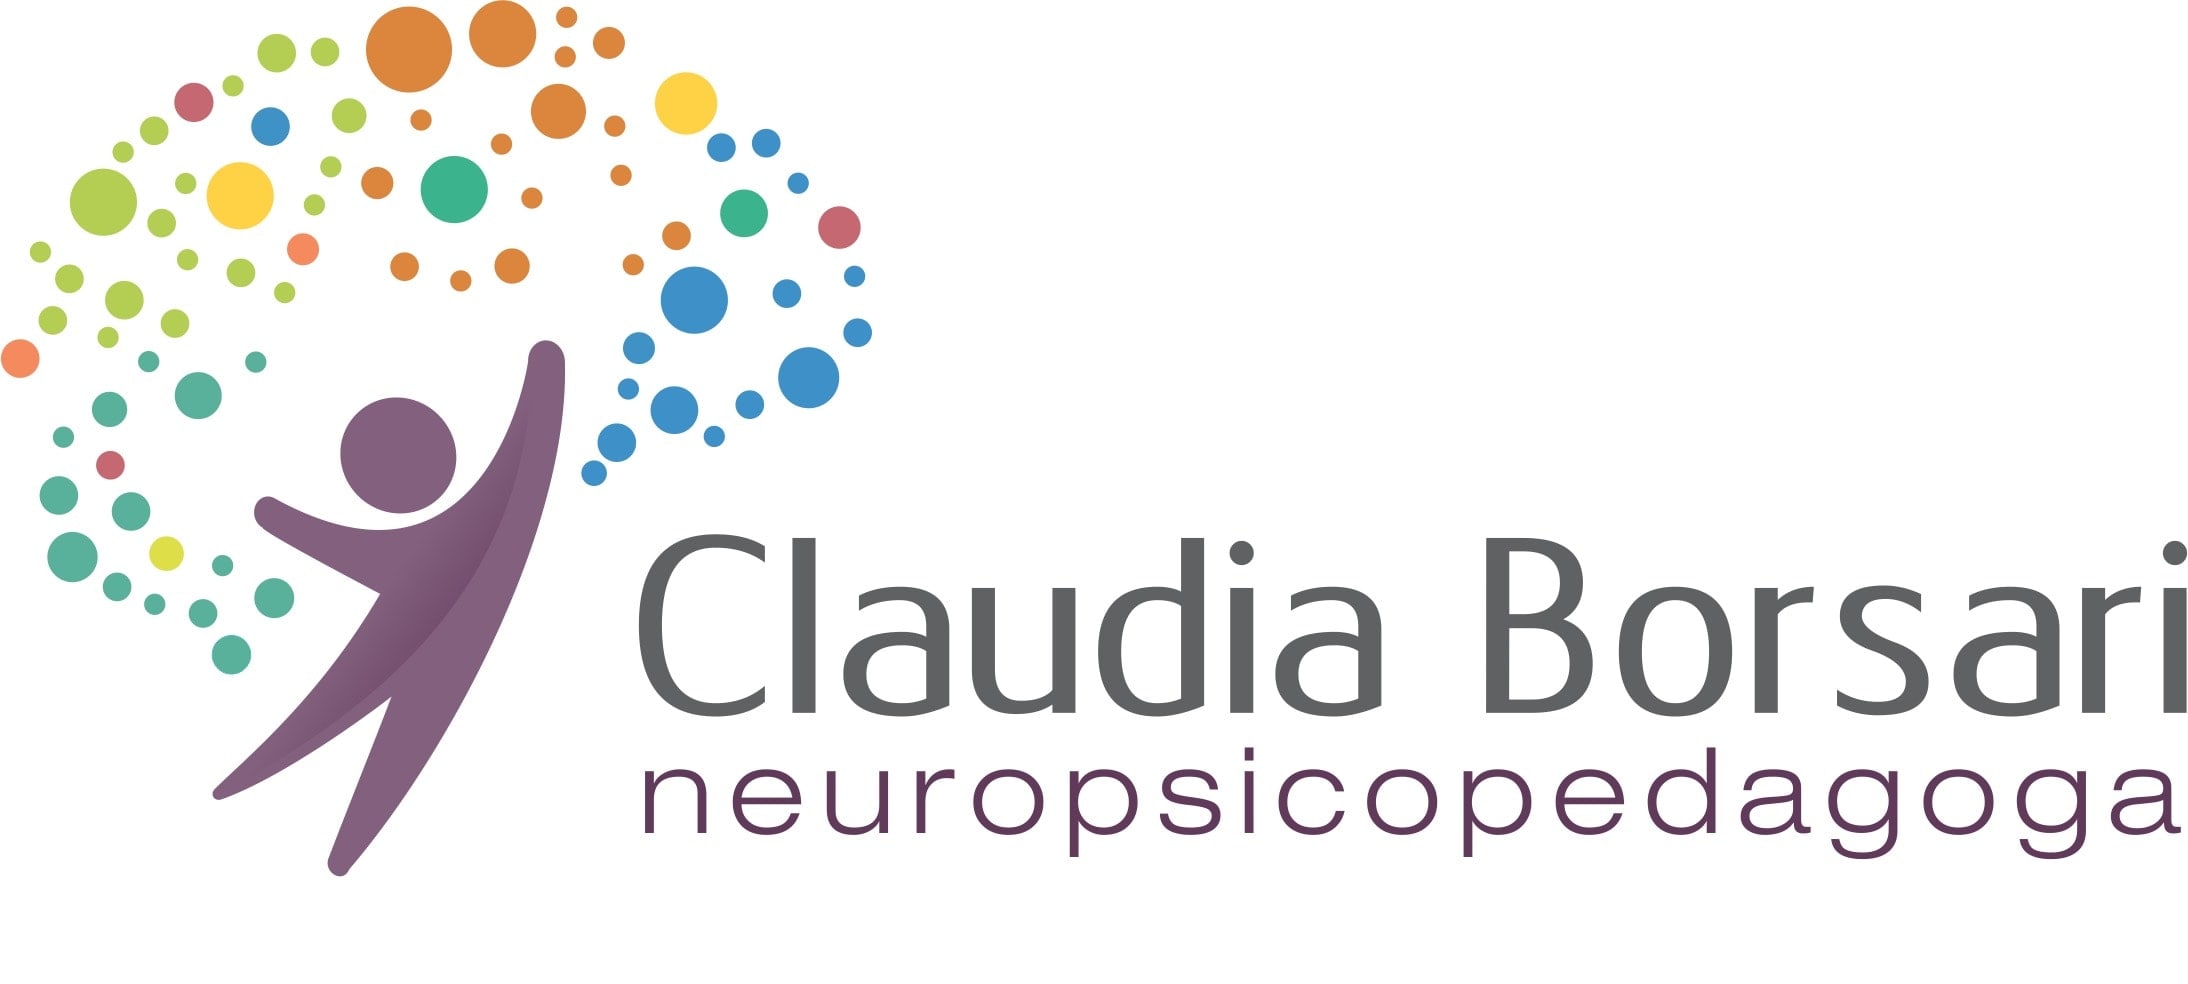 Claudia Borsari Neuropsicopedagoga